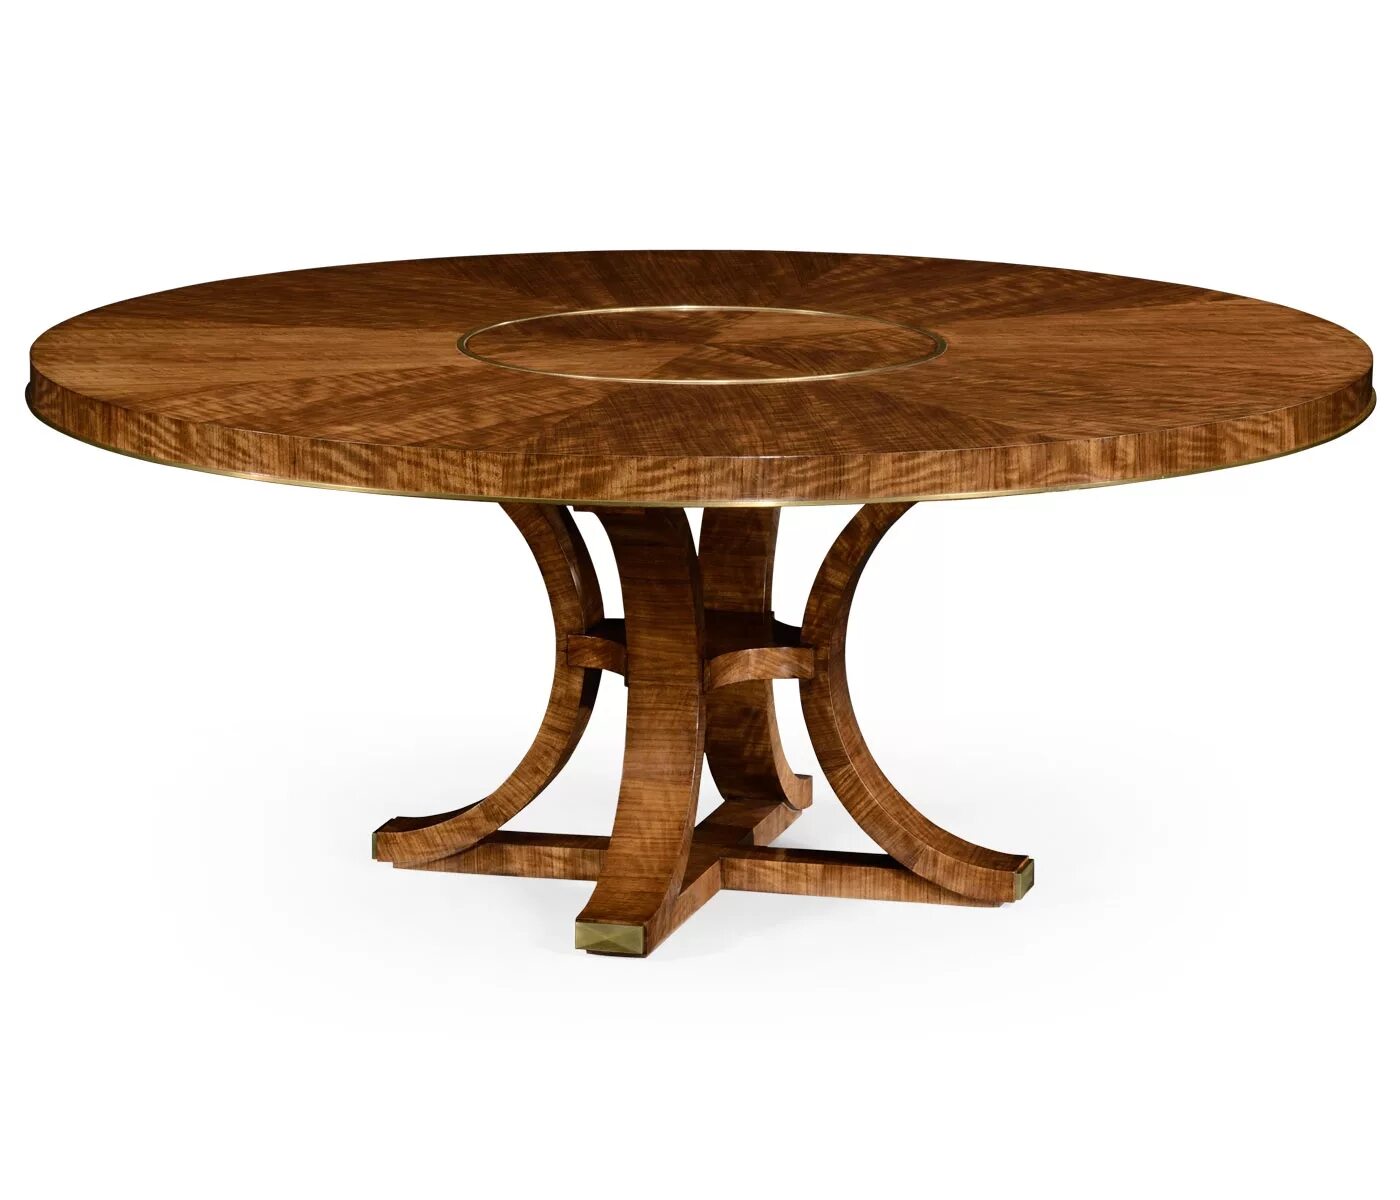 Стол Lakri Round Table. Круглый деревянный стол. Круглый деревянный столик. Стол деревянный обеденный круглый. Красивые круглые столы